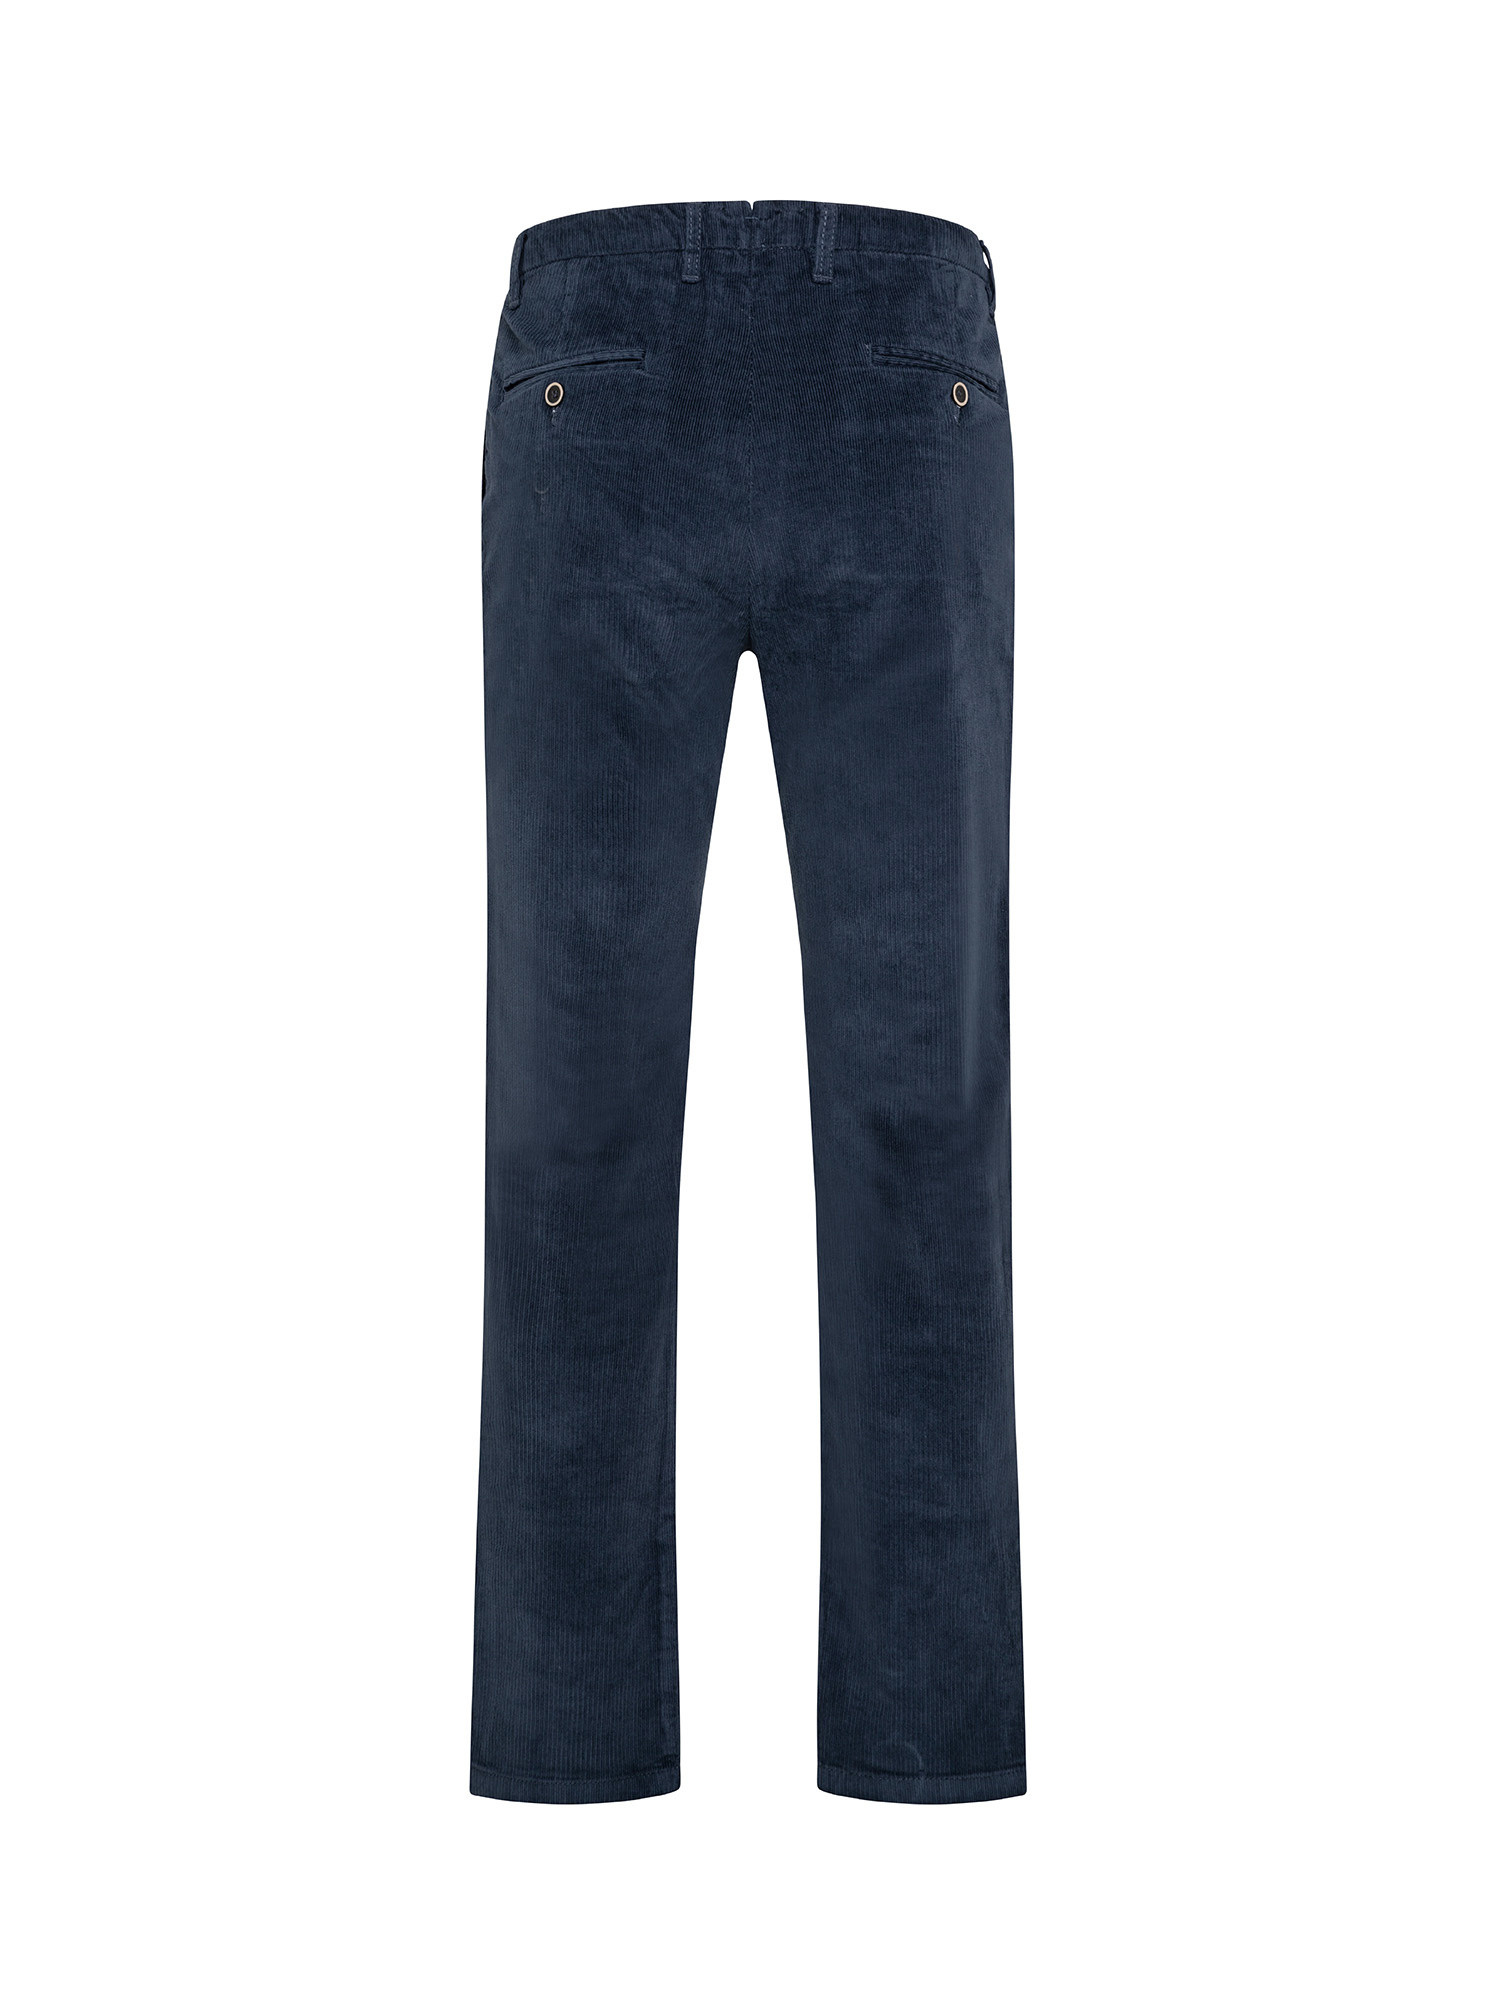 JCT - Slim fit velvet chino trousers, Denim, large image number 1